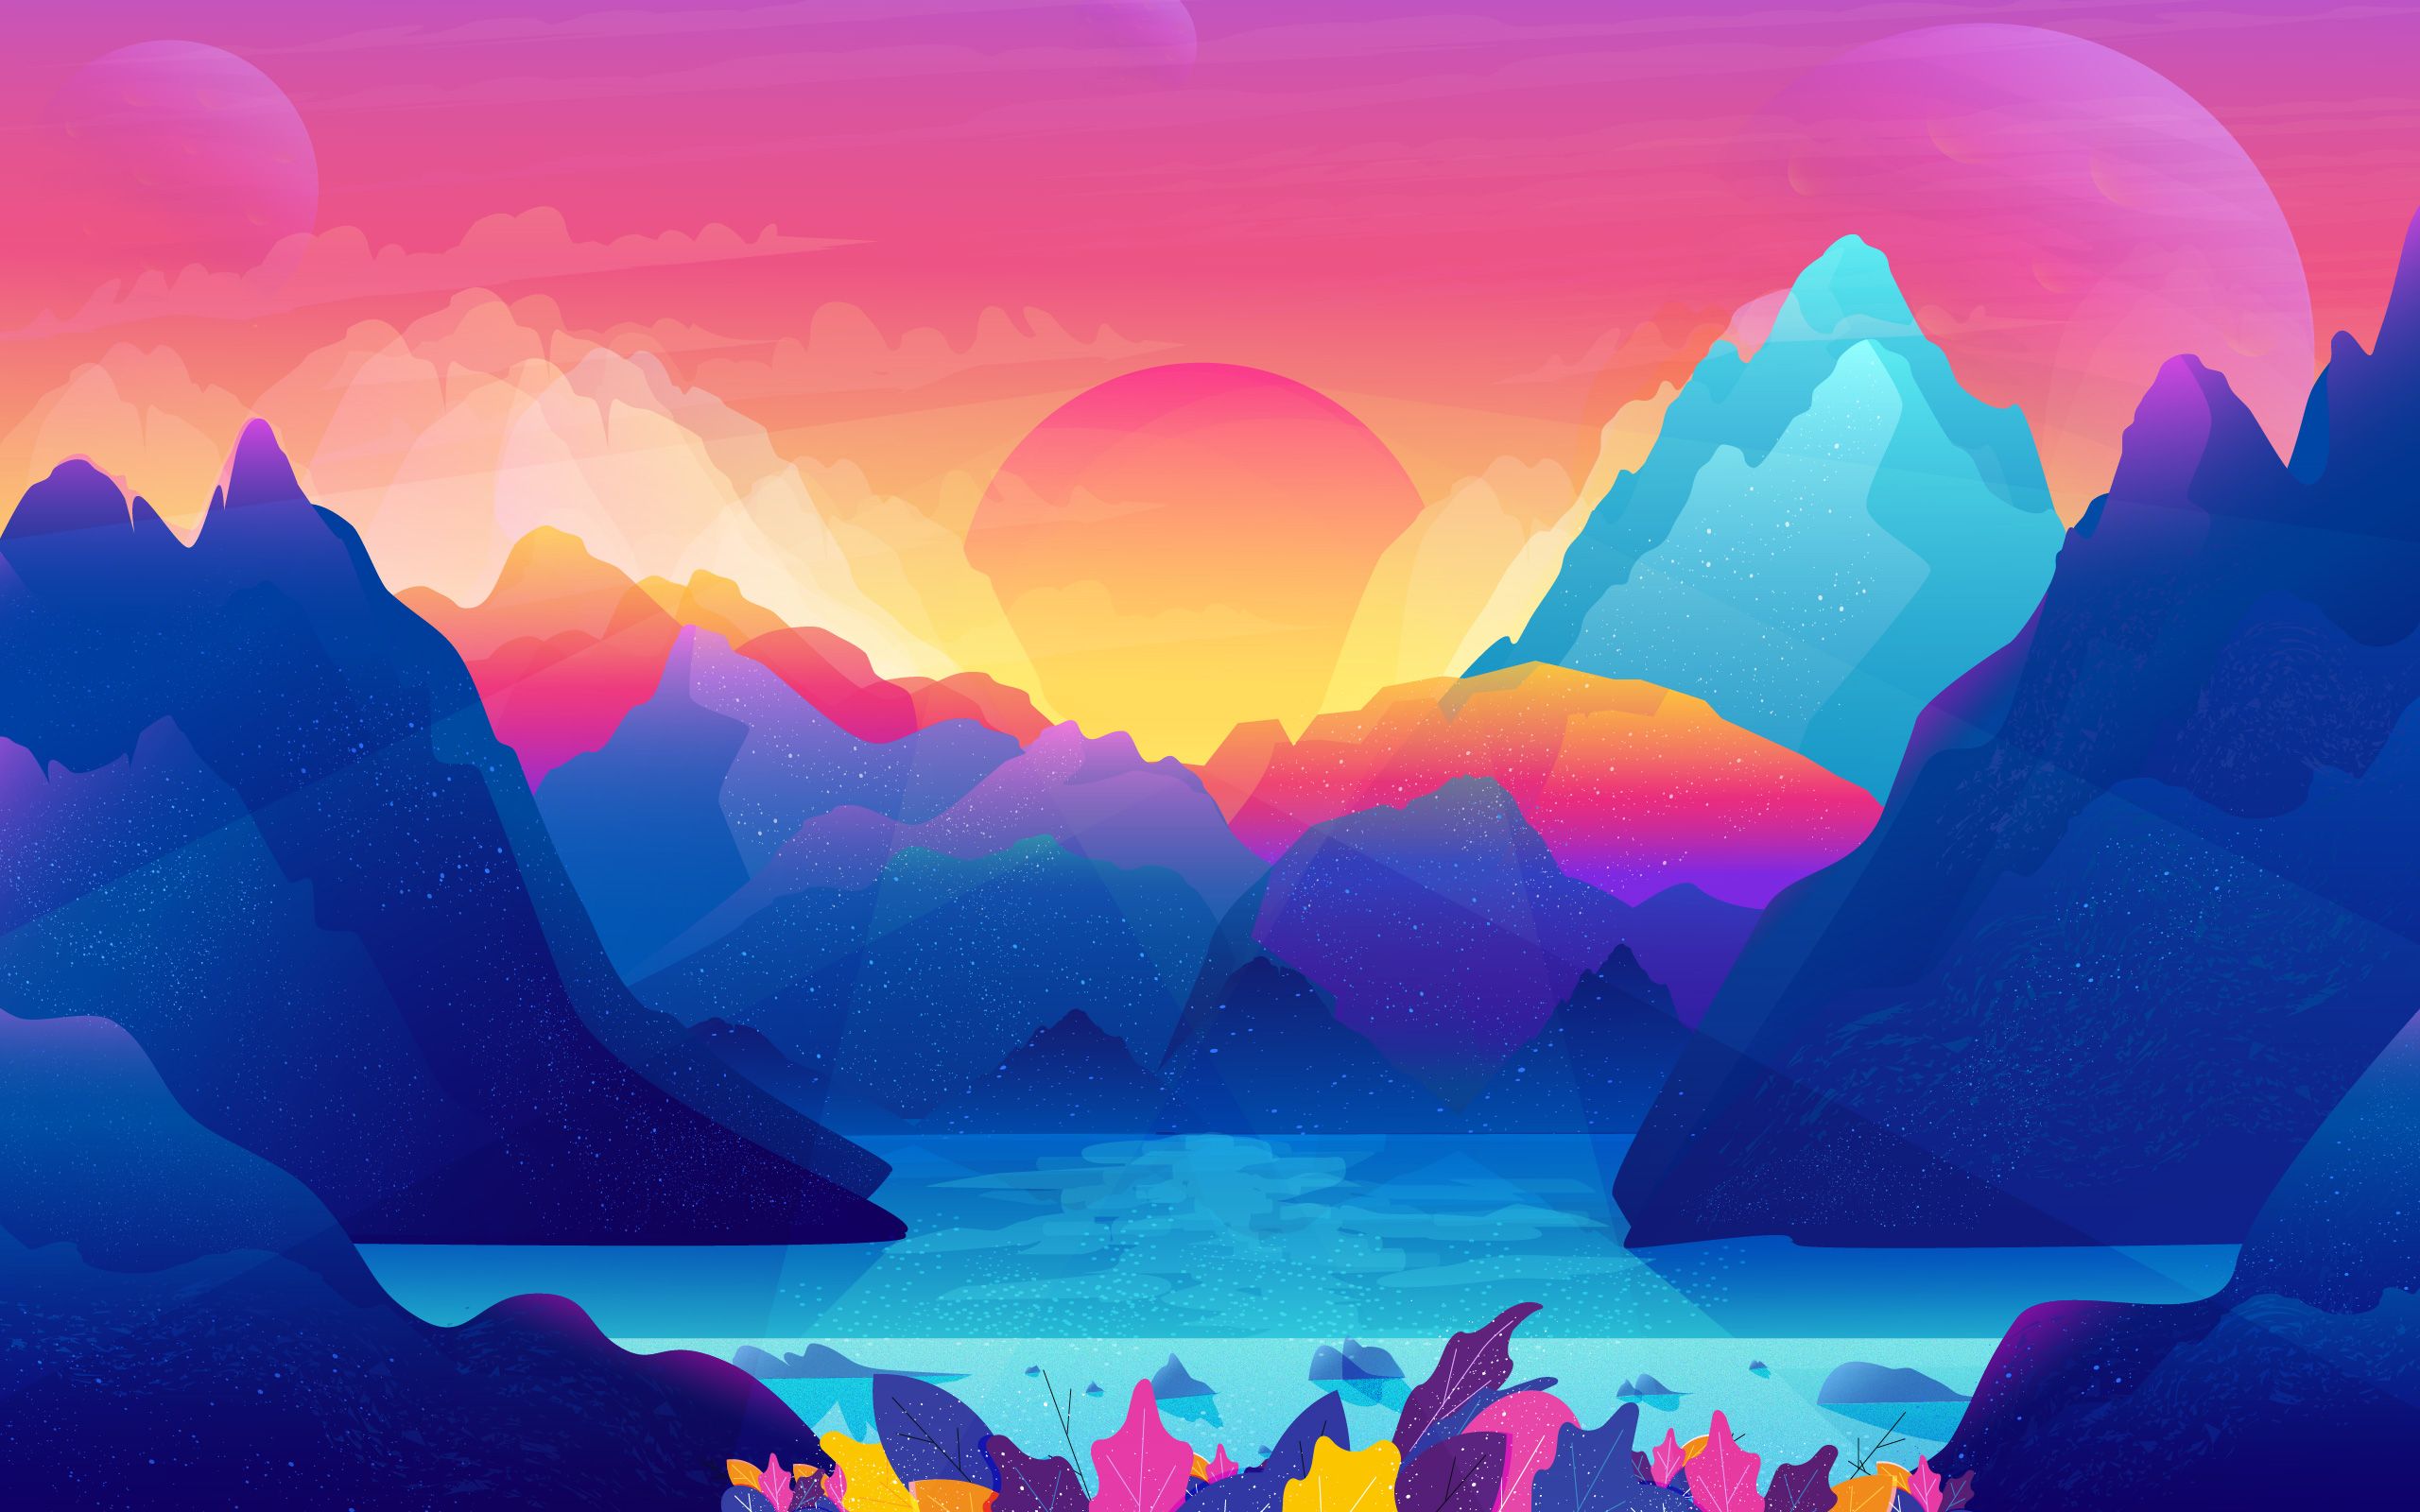 Sunrise Illustration, HD Artist, 4k Wallpaper, Image